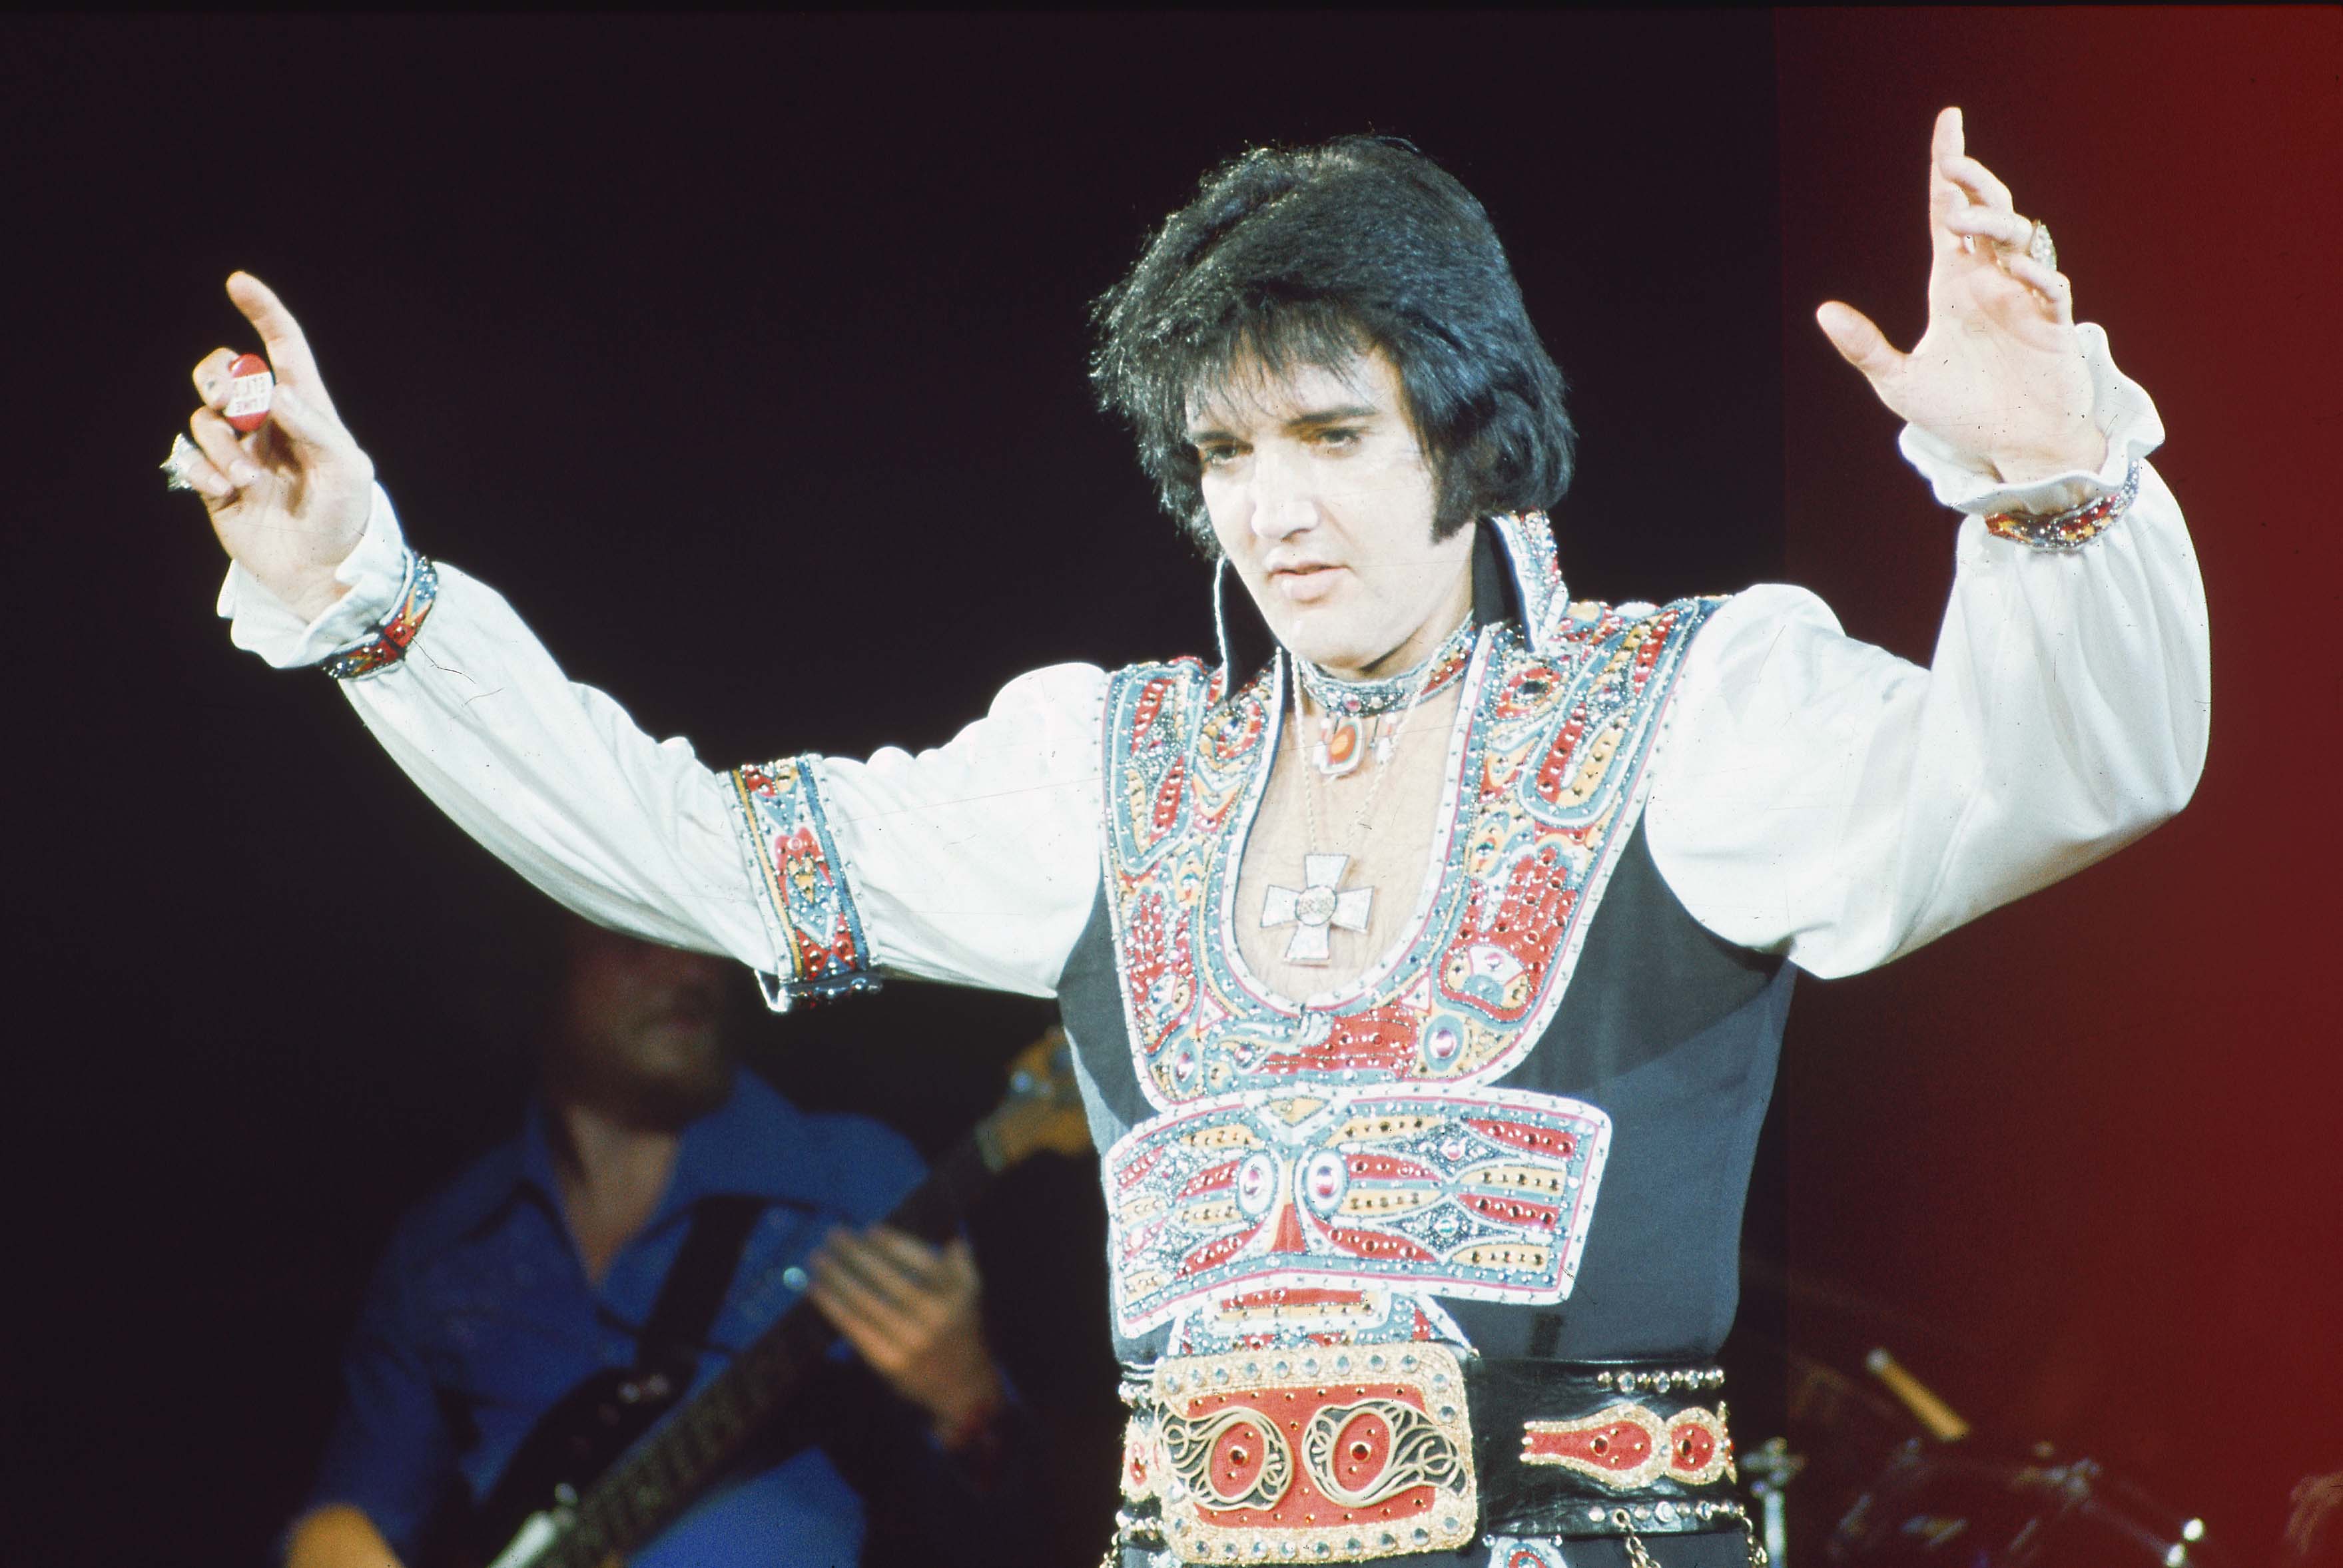 Elvis Presley performing on stage in 1975 | Source: Getty Images